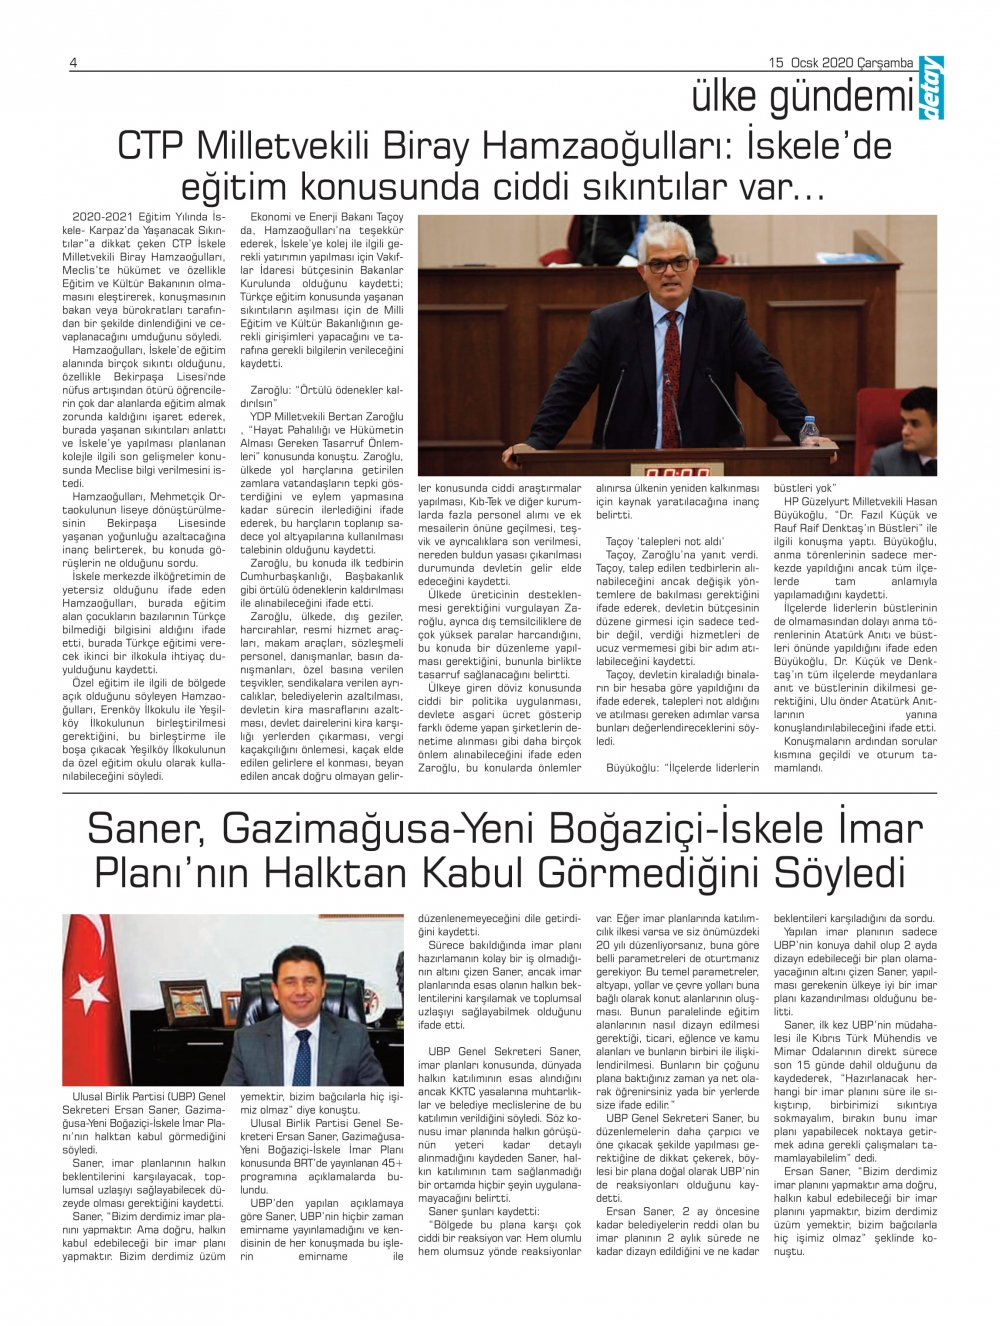 Detay Gazetes 15 Ocak 2020 galerisi resim 4